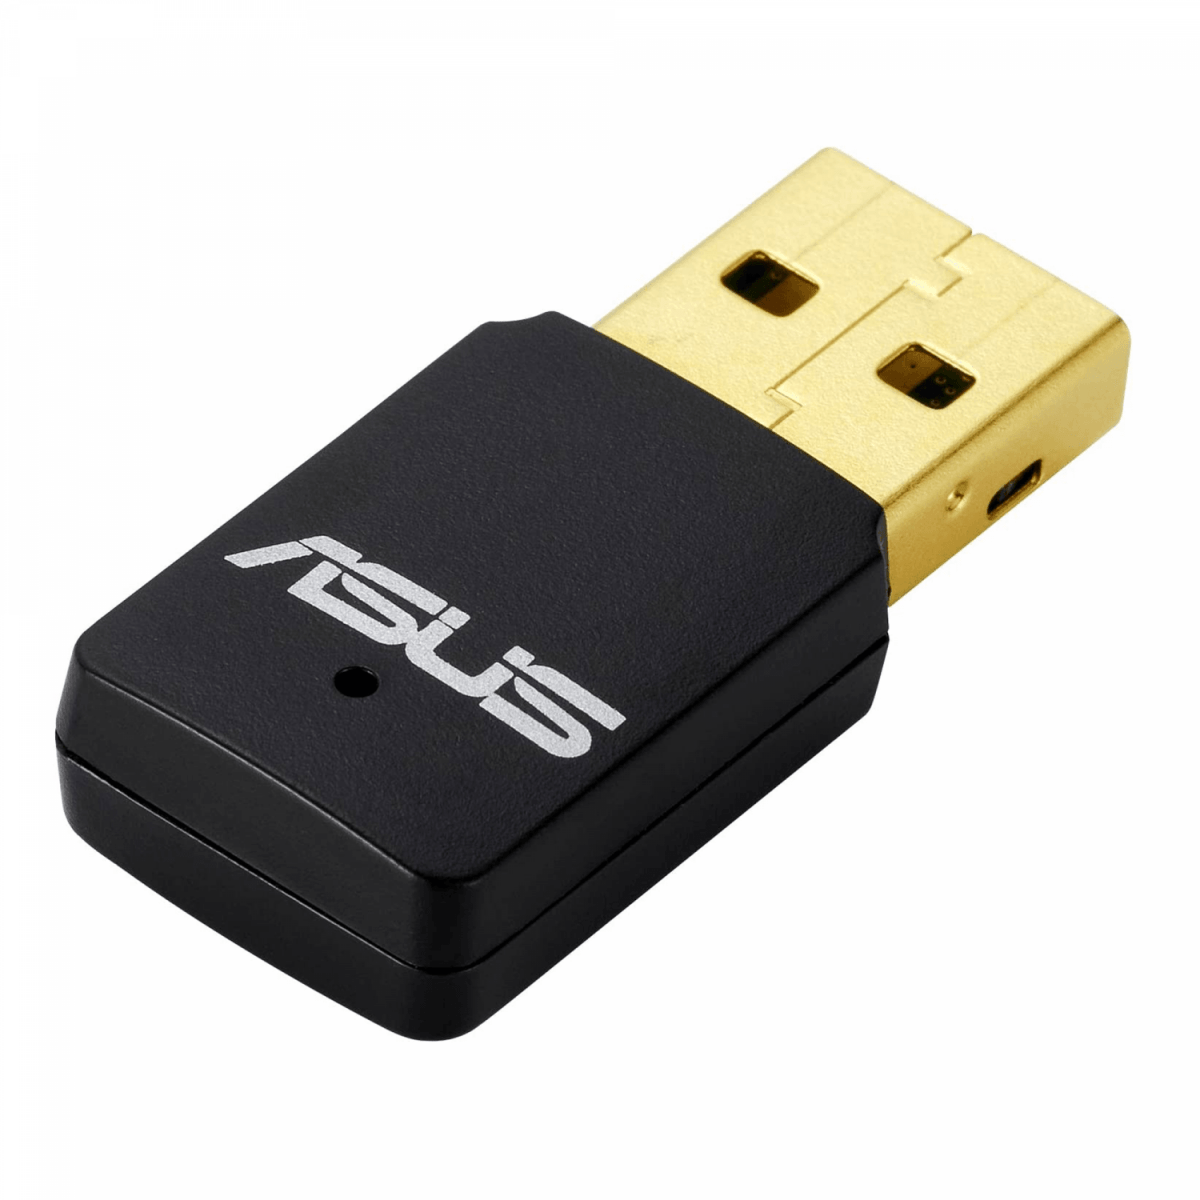 ASUS USB-N13 C1 Wireless-N300 - Veilingcoach.be